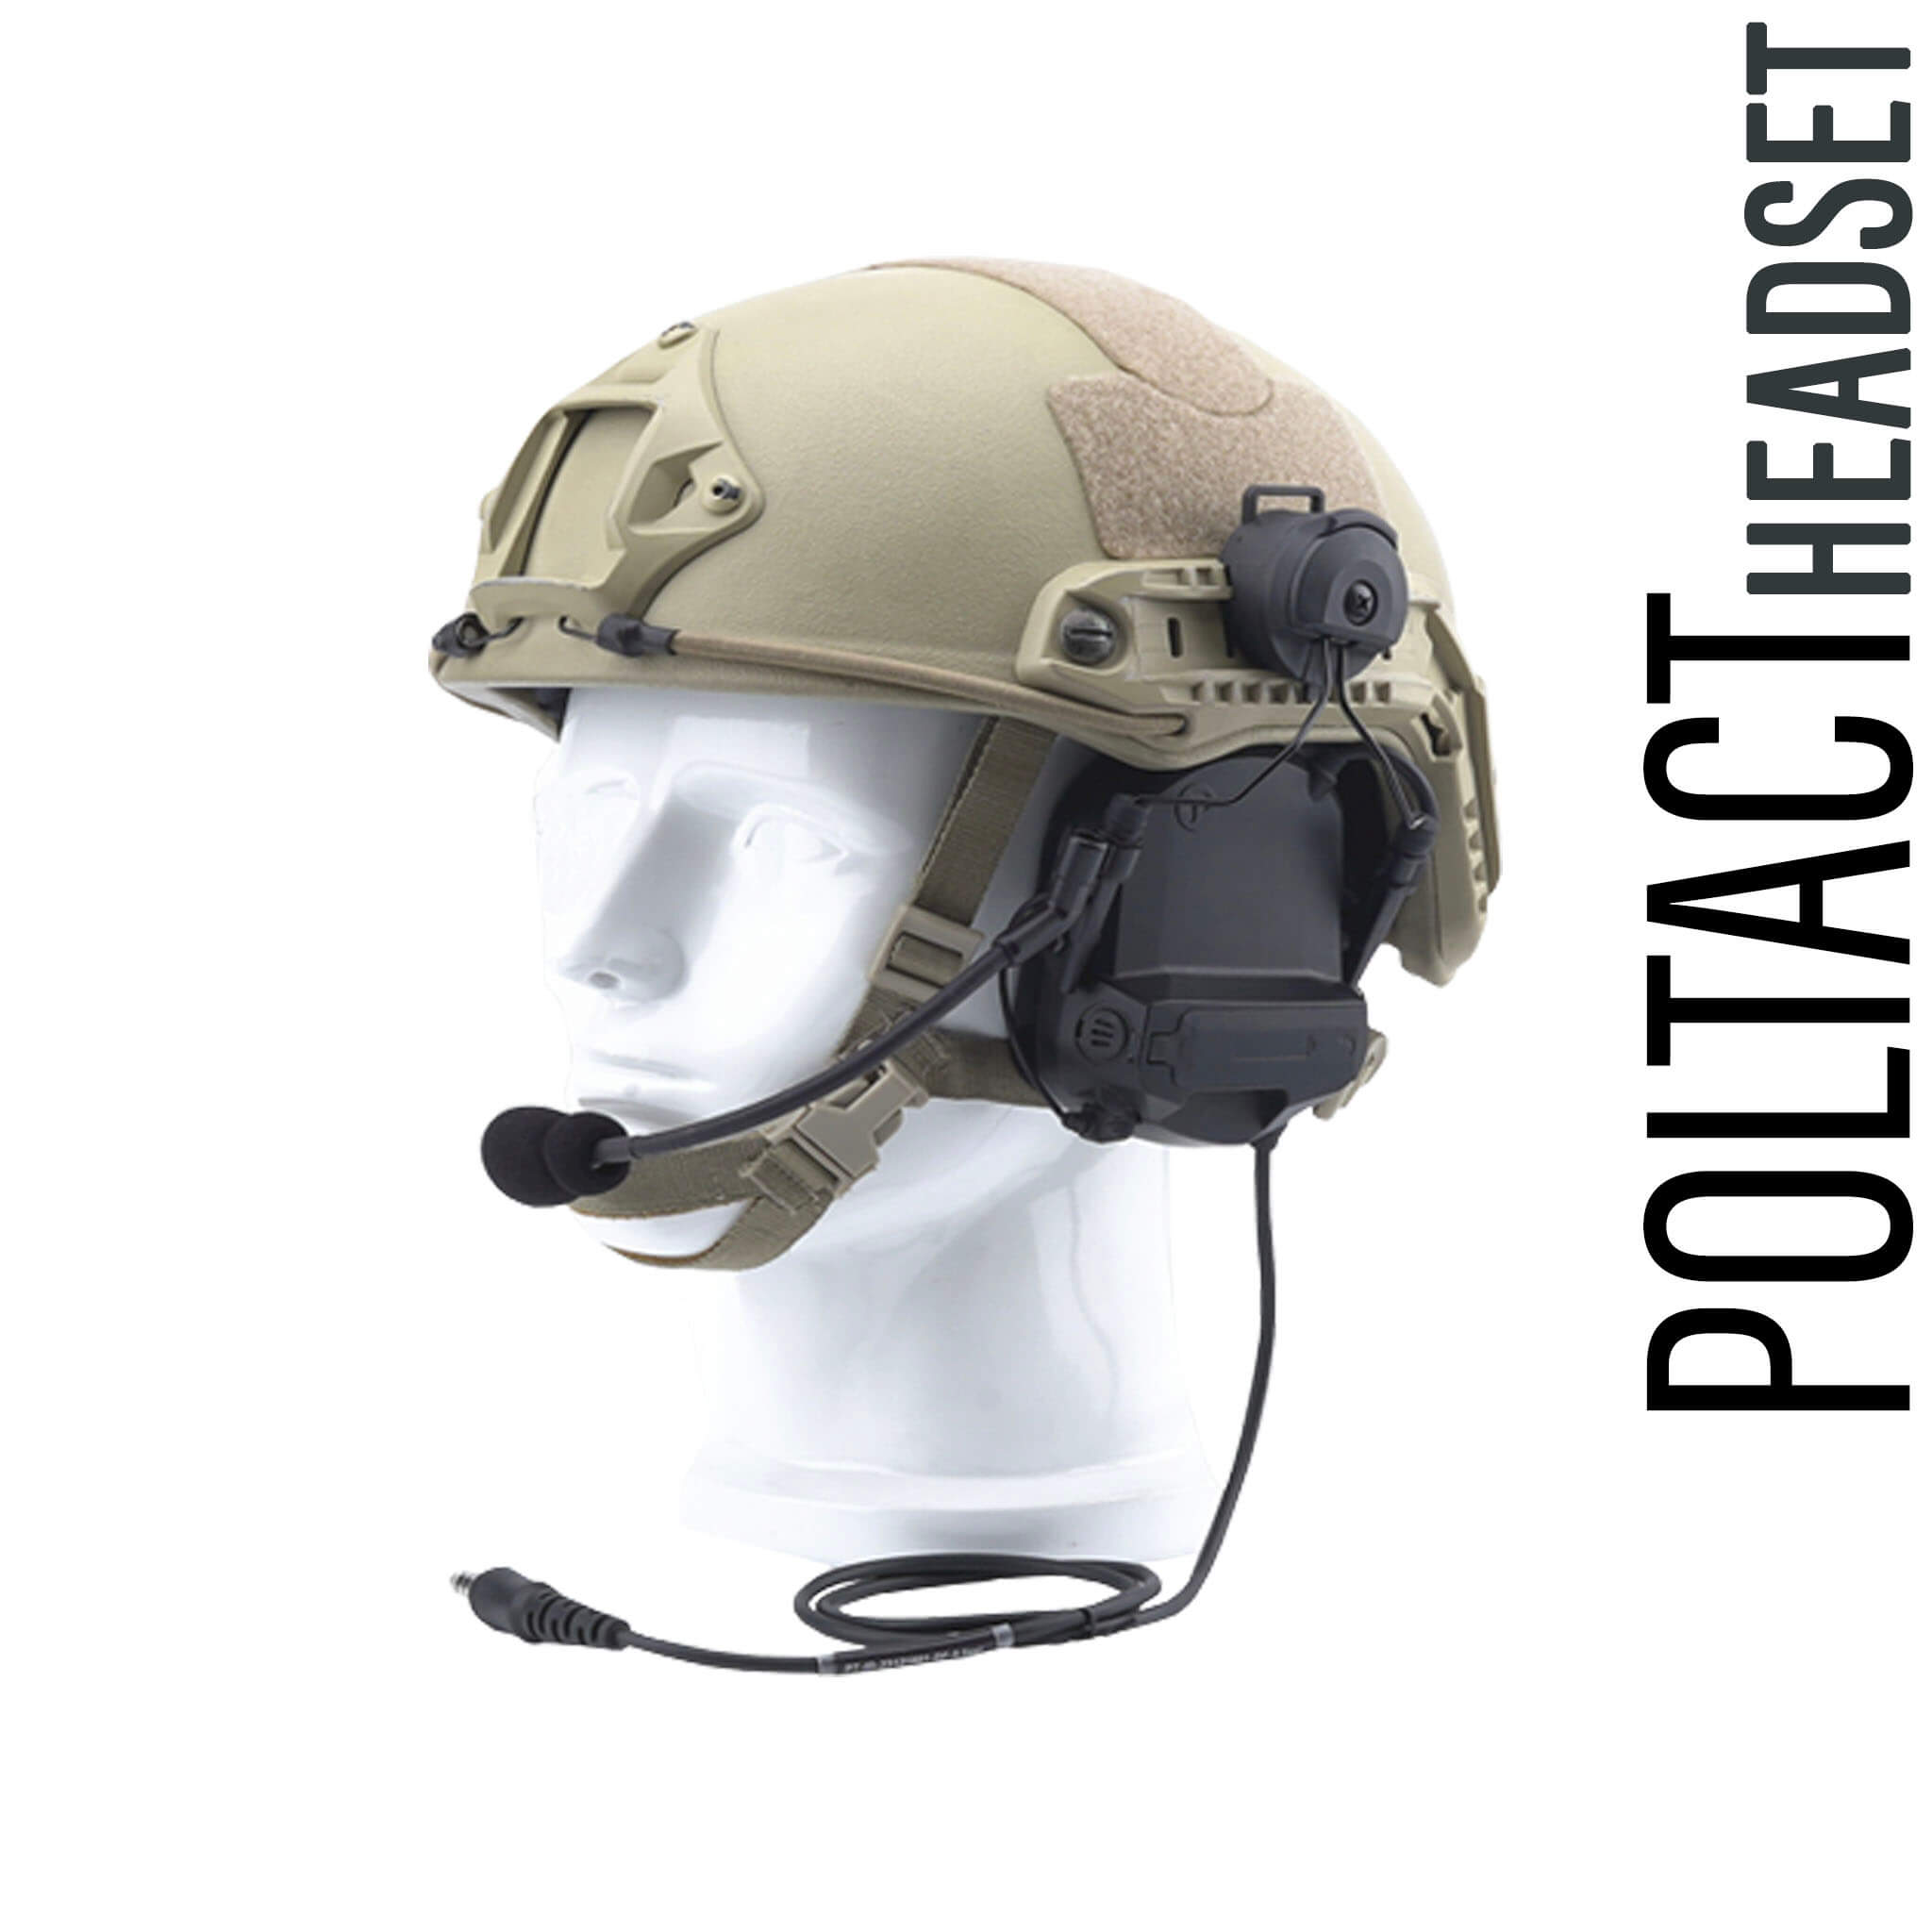 PolTact Helmet Headset Kit: PTH-V2-23 - Guaranteed to work w/: EF Johnson 51, 5000, 5100, 7700, 8100 Series, VP Viking Series 5000, 5100, 8100, 51SL ES, 51 Fire ES, 51SL ES, 51LT ES, 7700, Ascend Series, VP400, VP600, VP900 & More